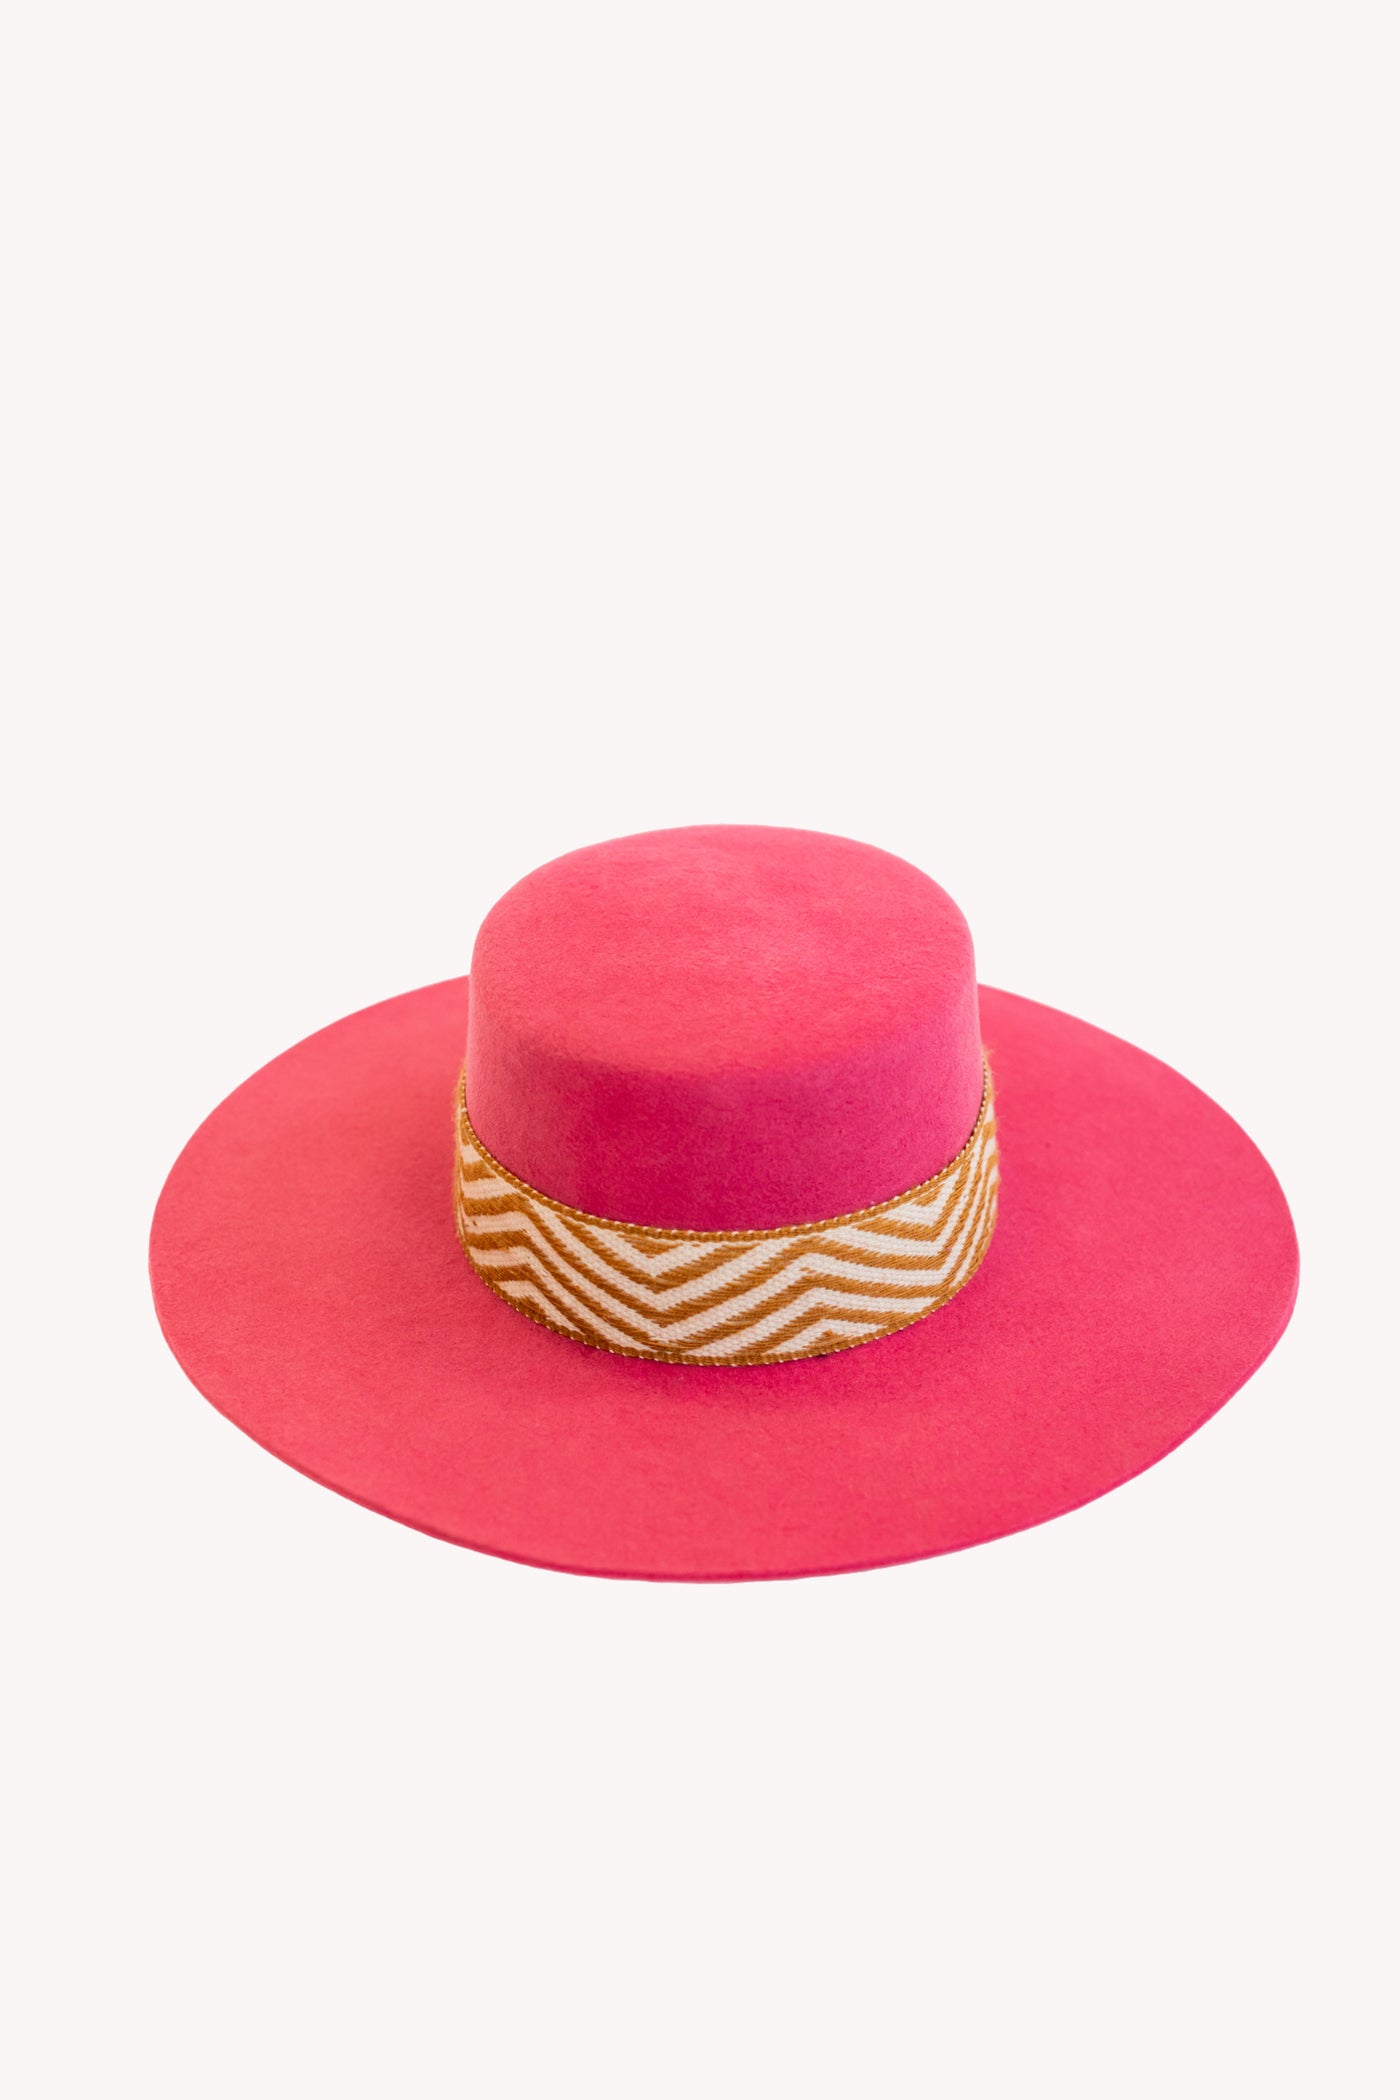 pink Spanish style hat